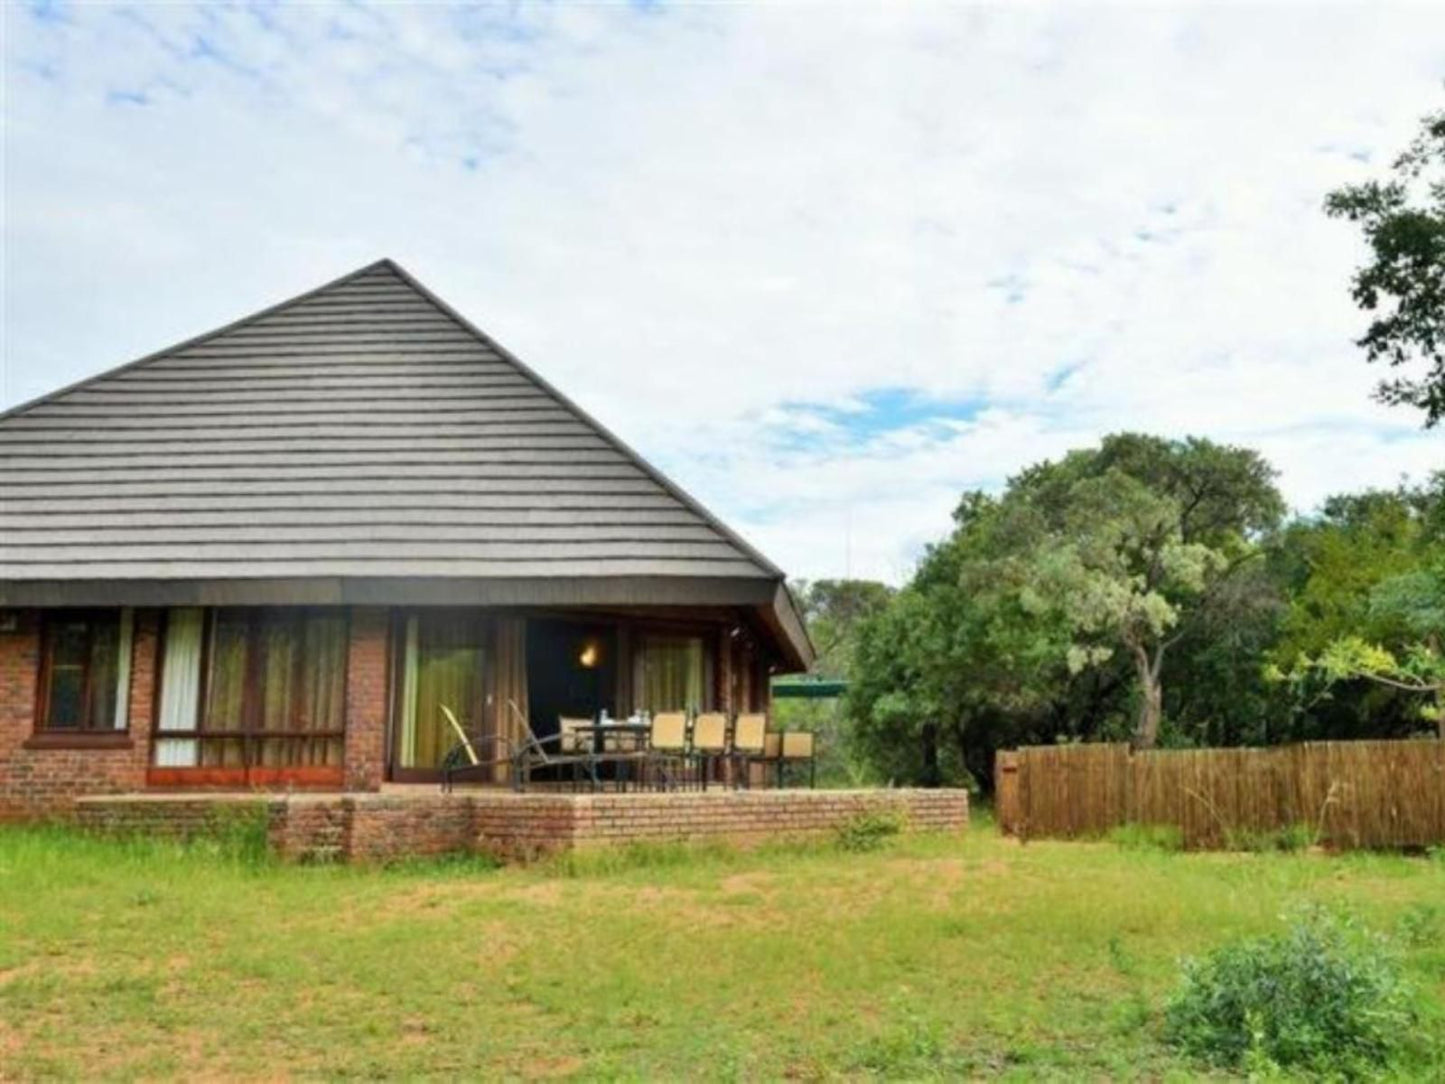 Bushtime At Mabula Mabula Private Game Reserve Limpopo Province South Africa Building, Architecture